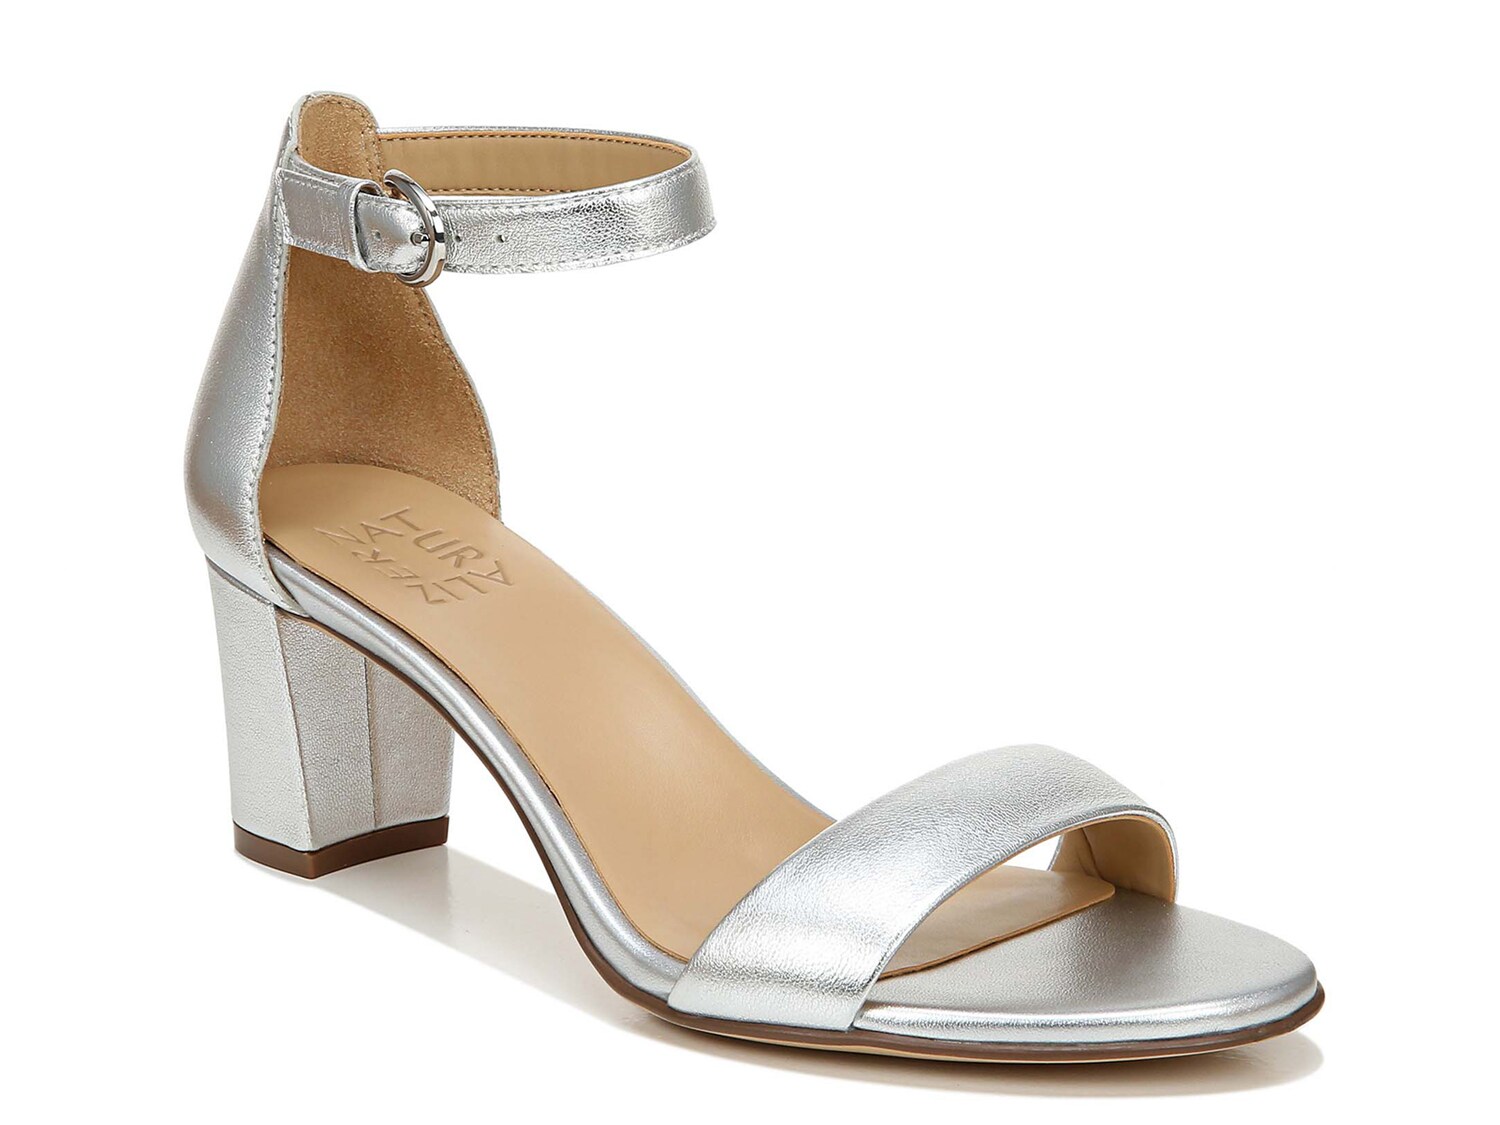 silver dress shoes